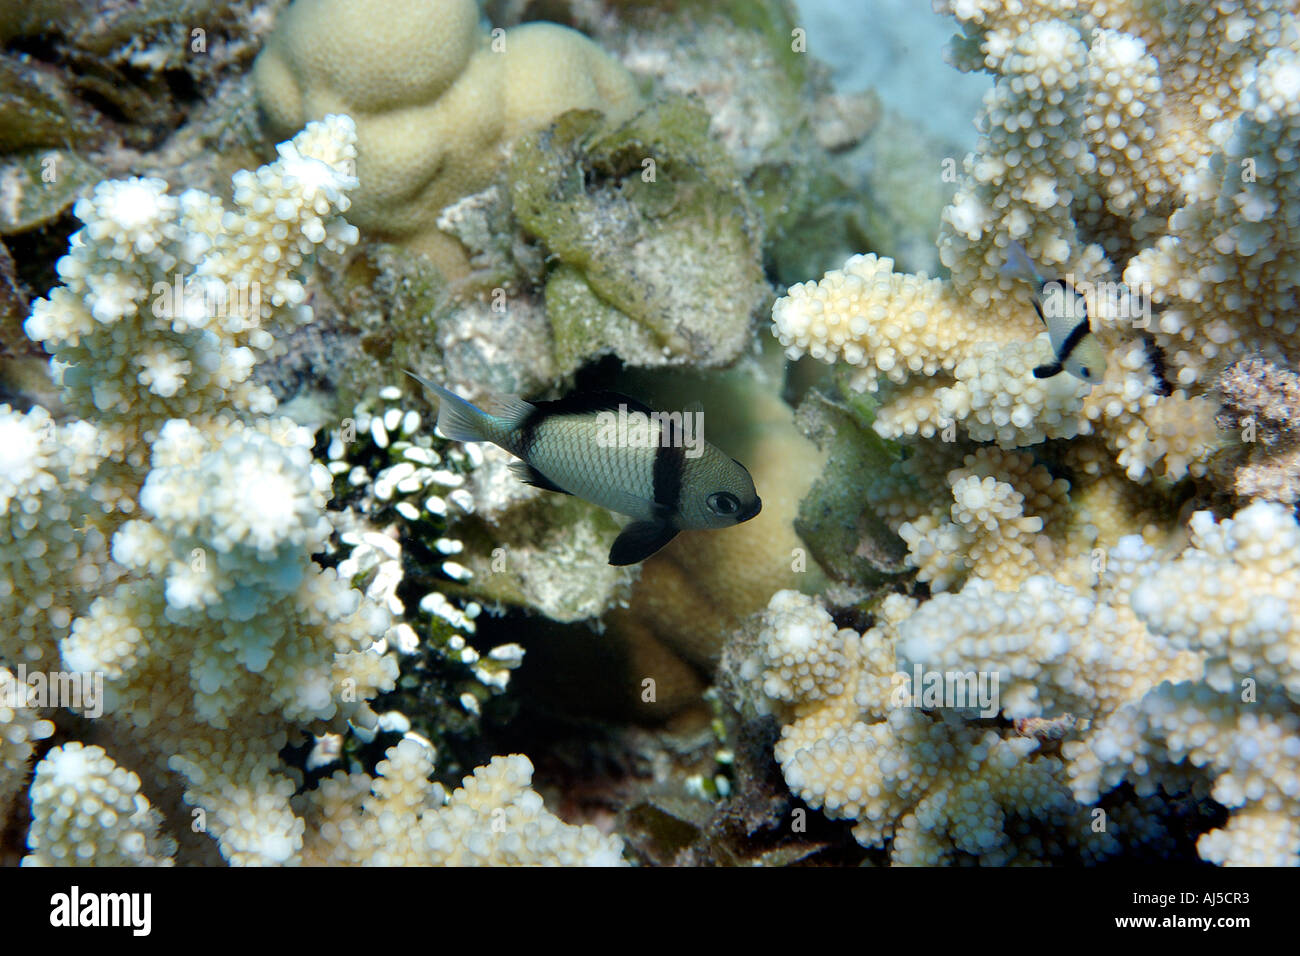 Reticulated Dascyllus Dascyllus reticulatus sheltered between corals Ailuk atoll Marshall Islands Pacific Stock Photo